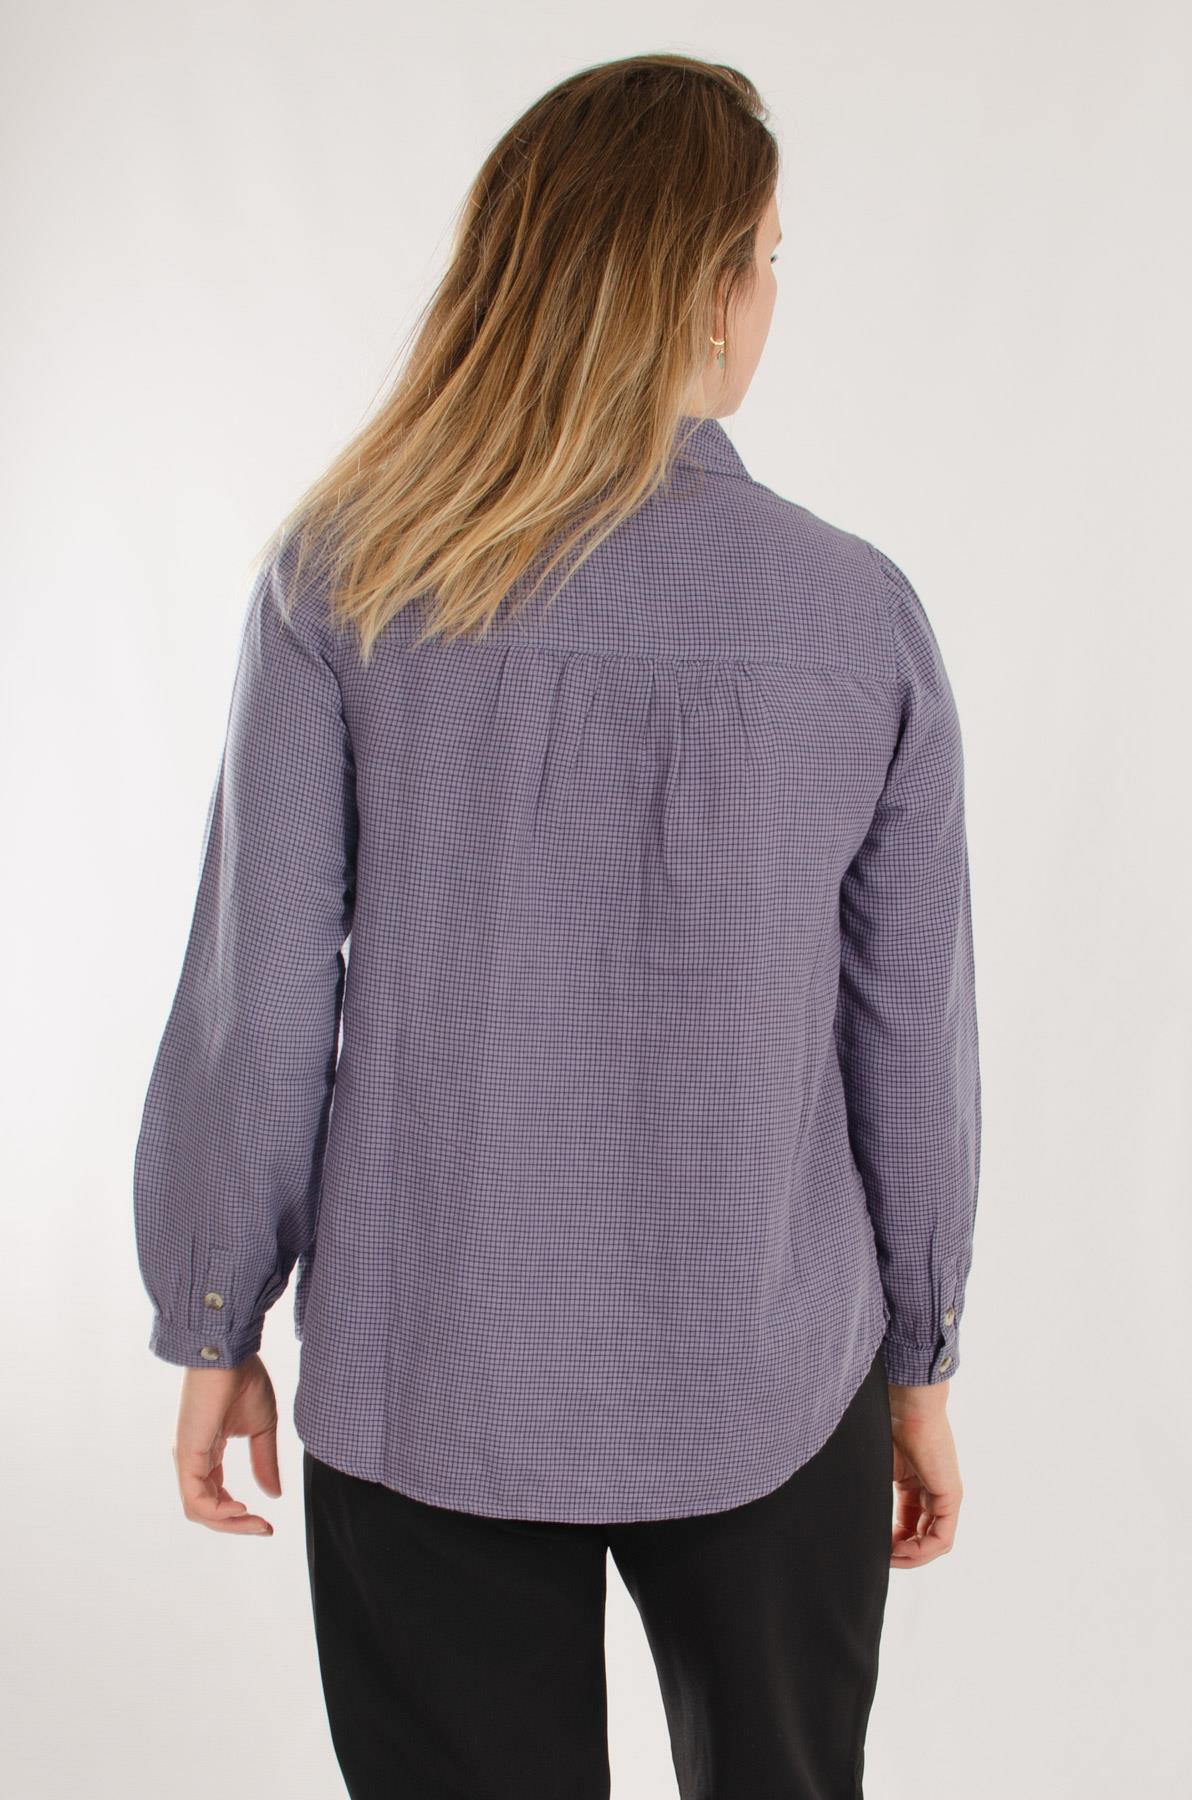 Purple Check Shirt